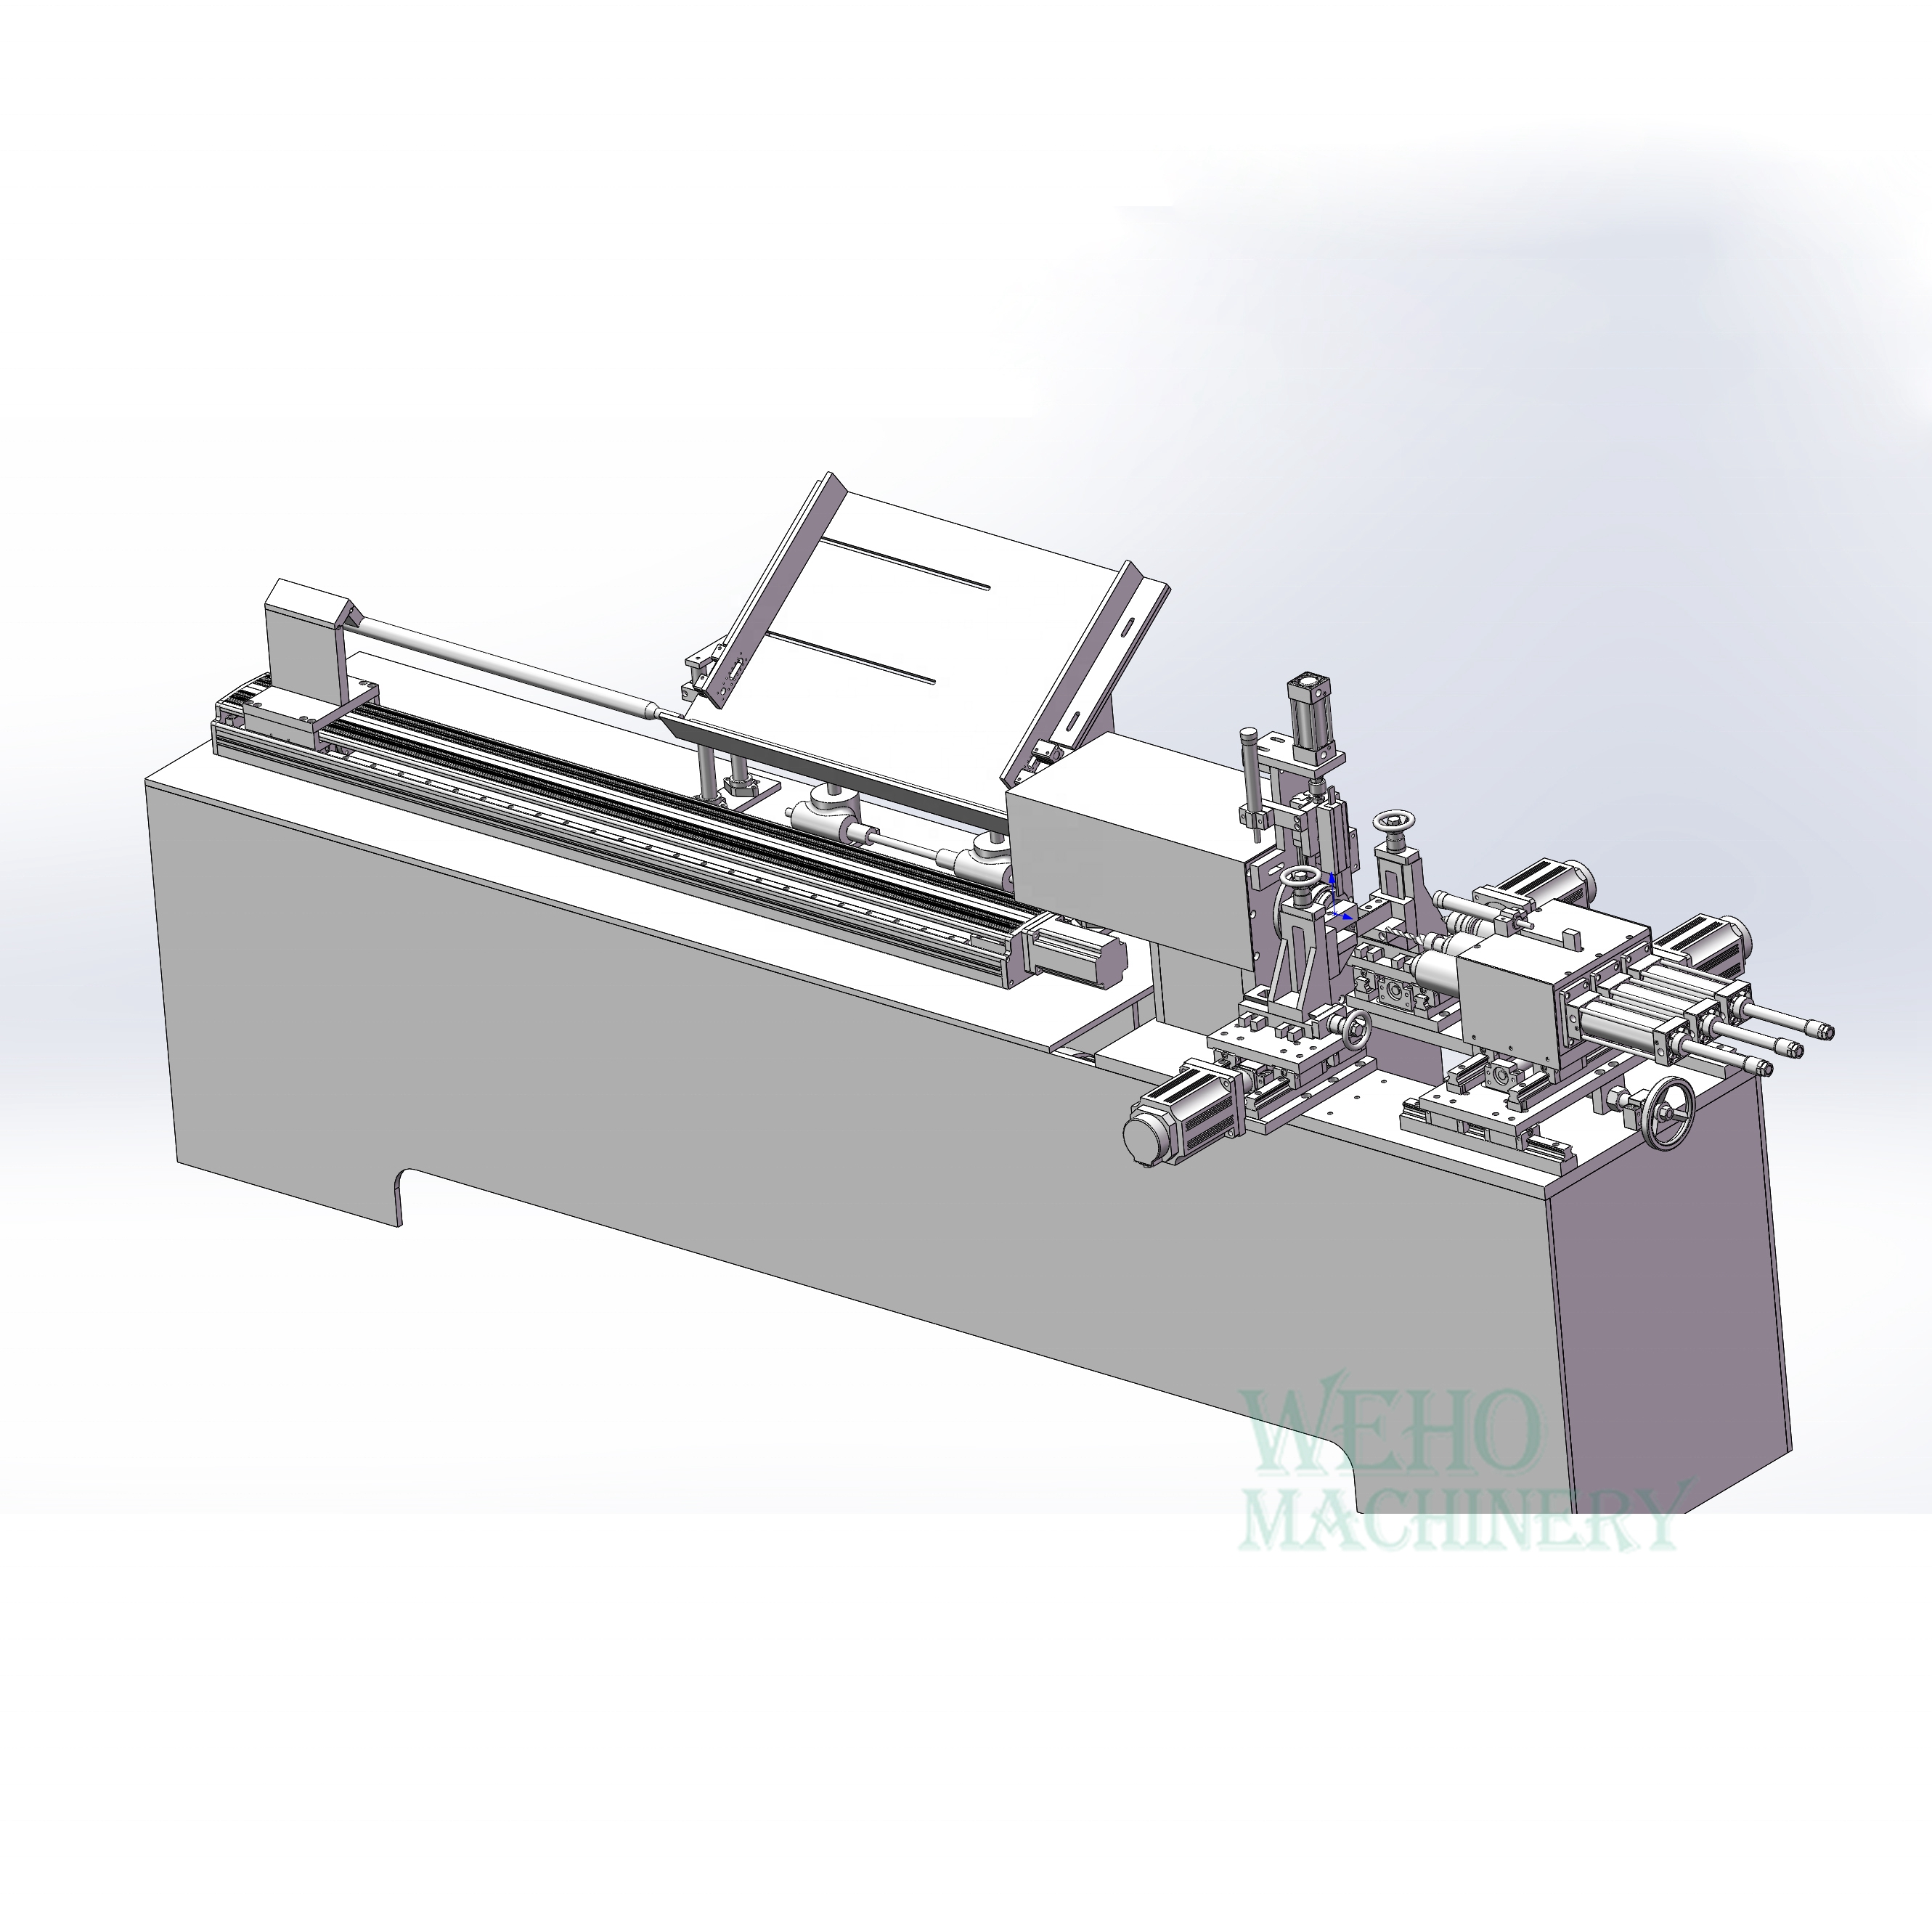 CNC wood 4 axis turning lathe manufactures cutting spinlde moulder machine | Wood Lathe